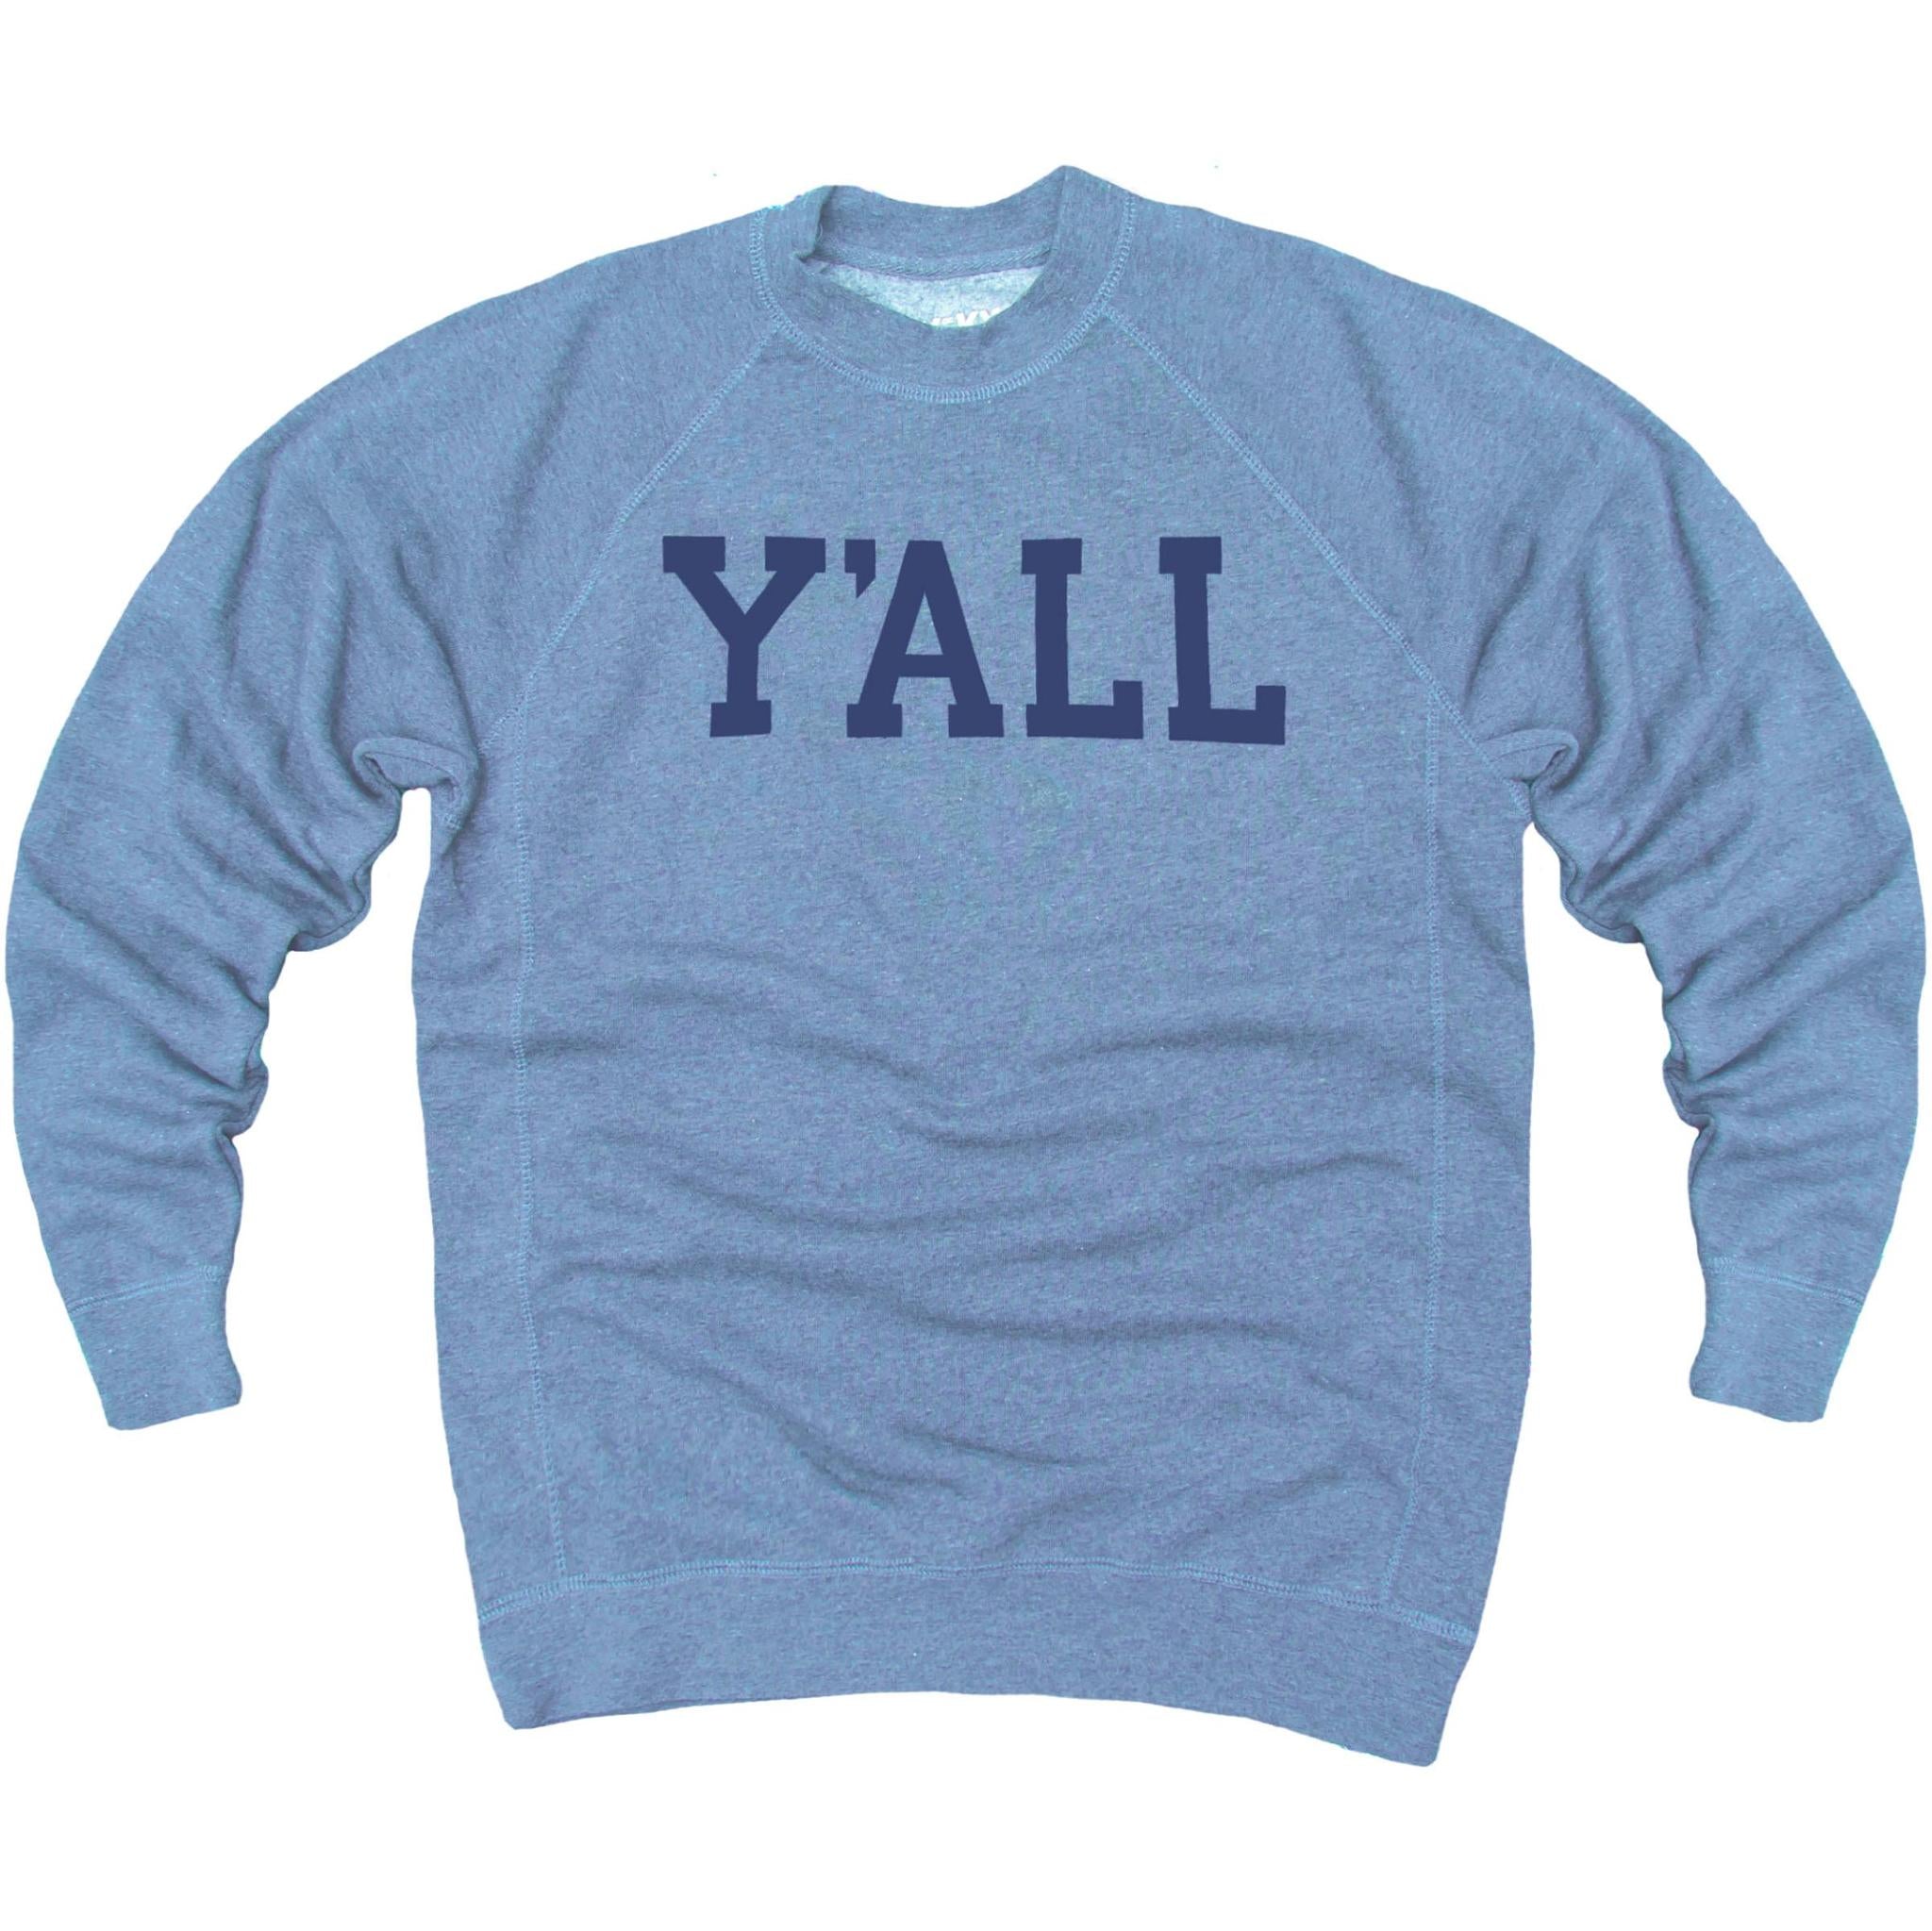 Y'ALL Sweatshirt (Lt. Blue)-Sweatshirt-KY for KY Store